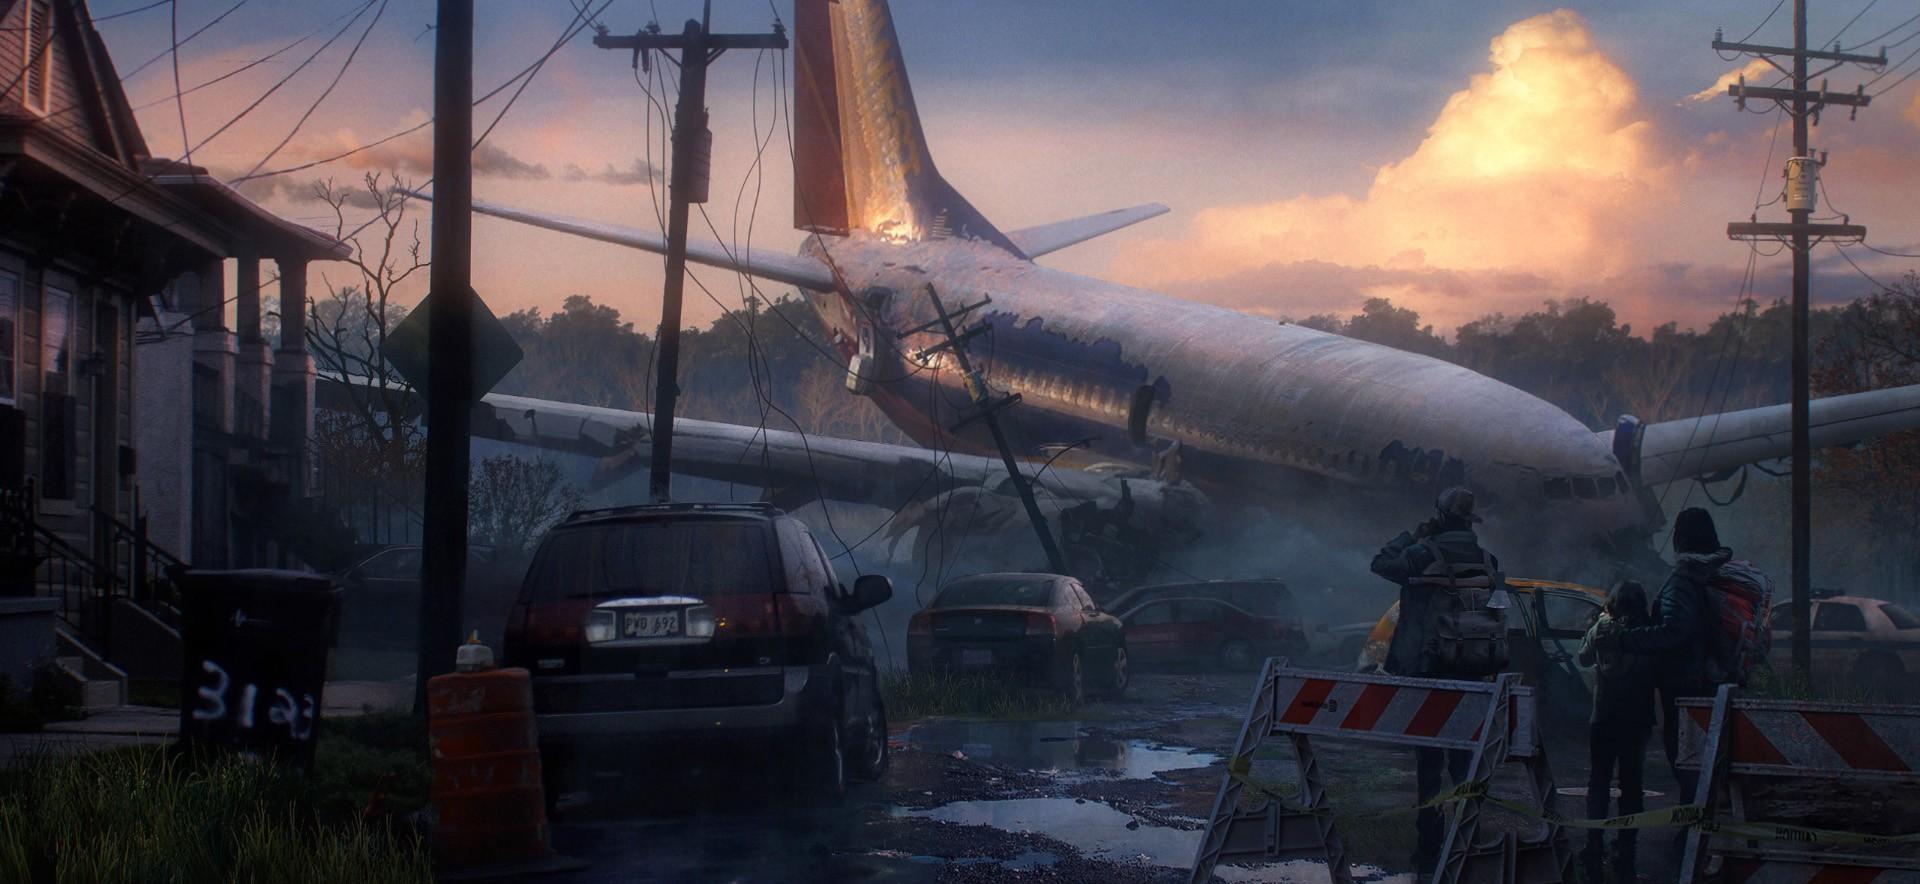 artwork, #apocalyptic, #aircraft, #crash, #drawing, #Boeing 737